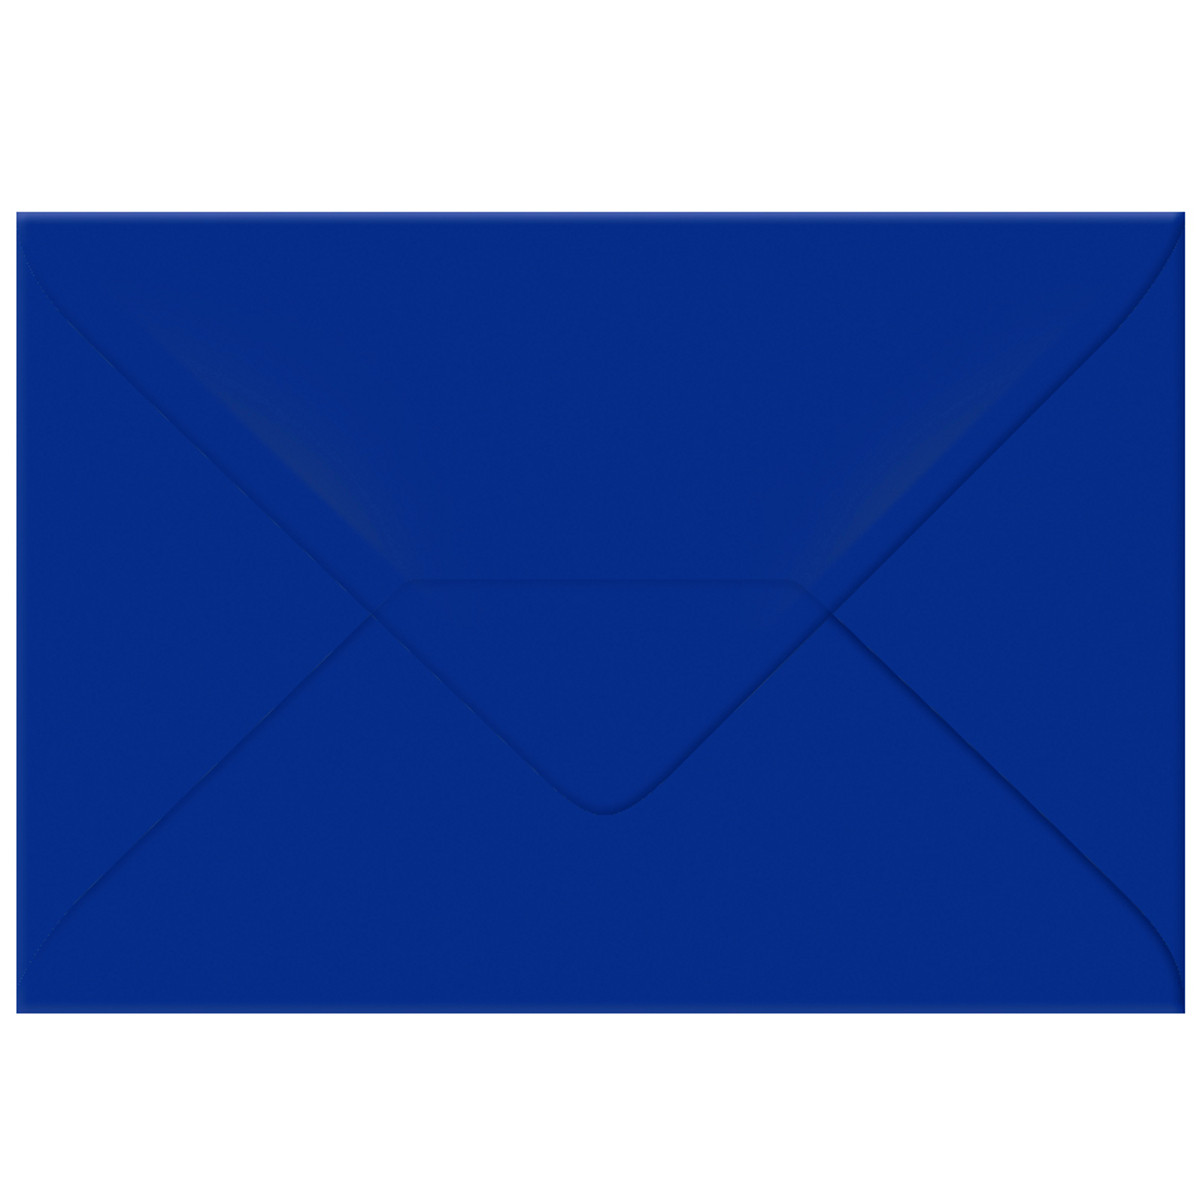 Transparentpapier-Kuverts "Uni" 115 g/qm dunkelblau - 5 Stück